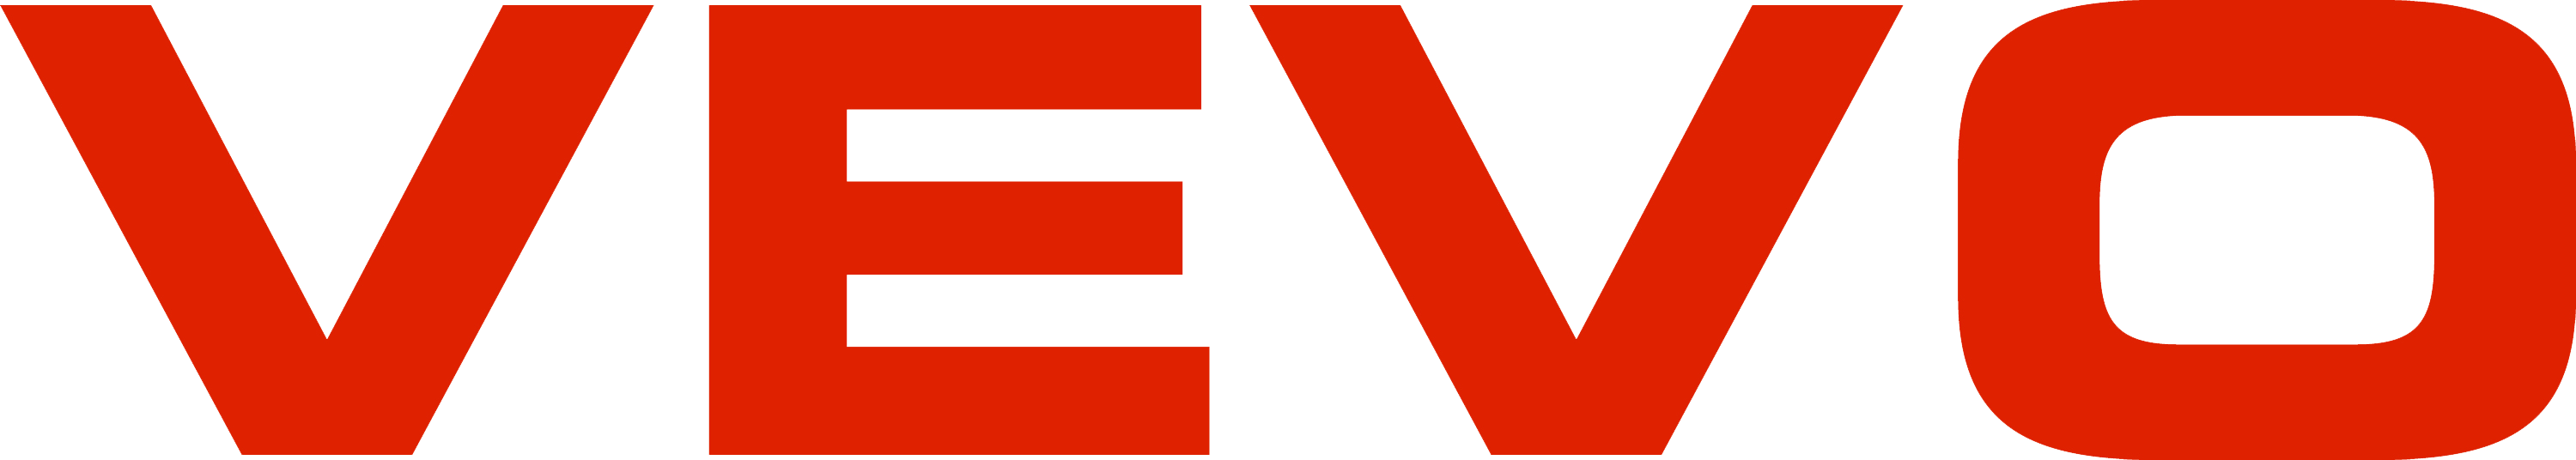 Vevo Logo - File:VEVO logo.png - Wikimedia Commons